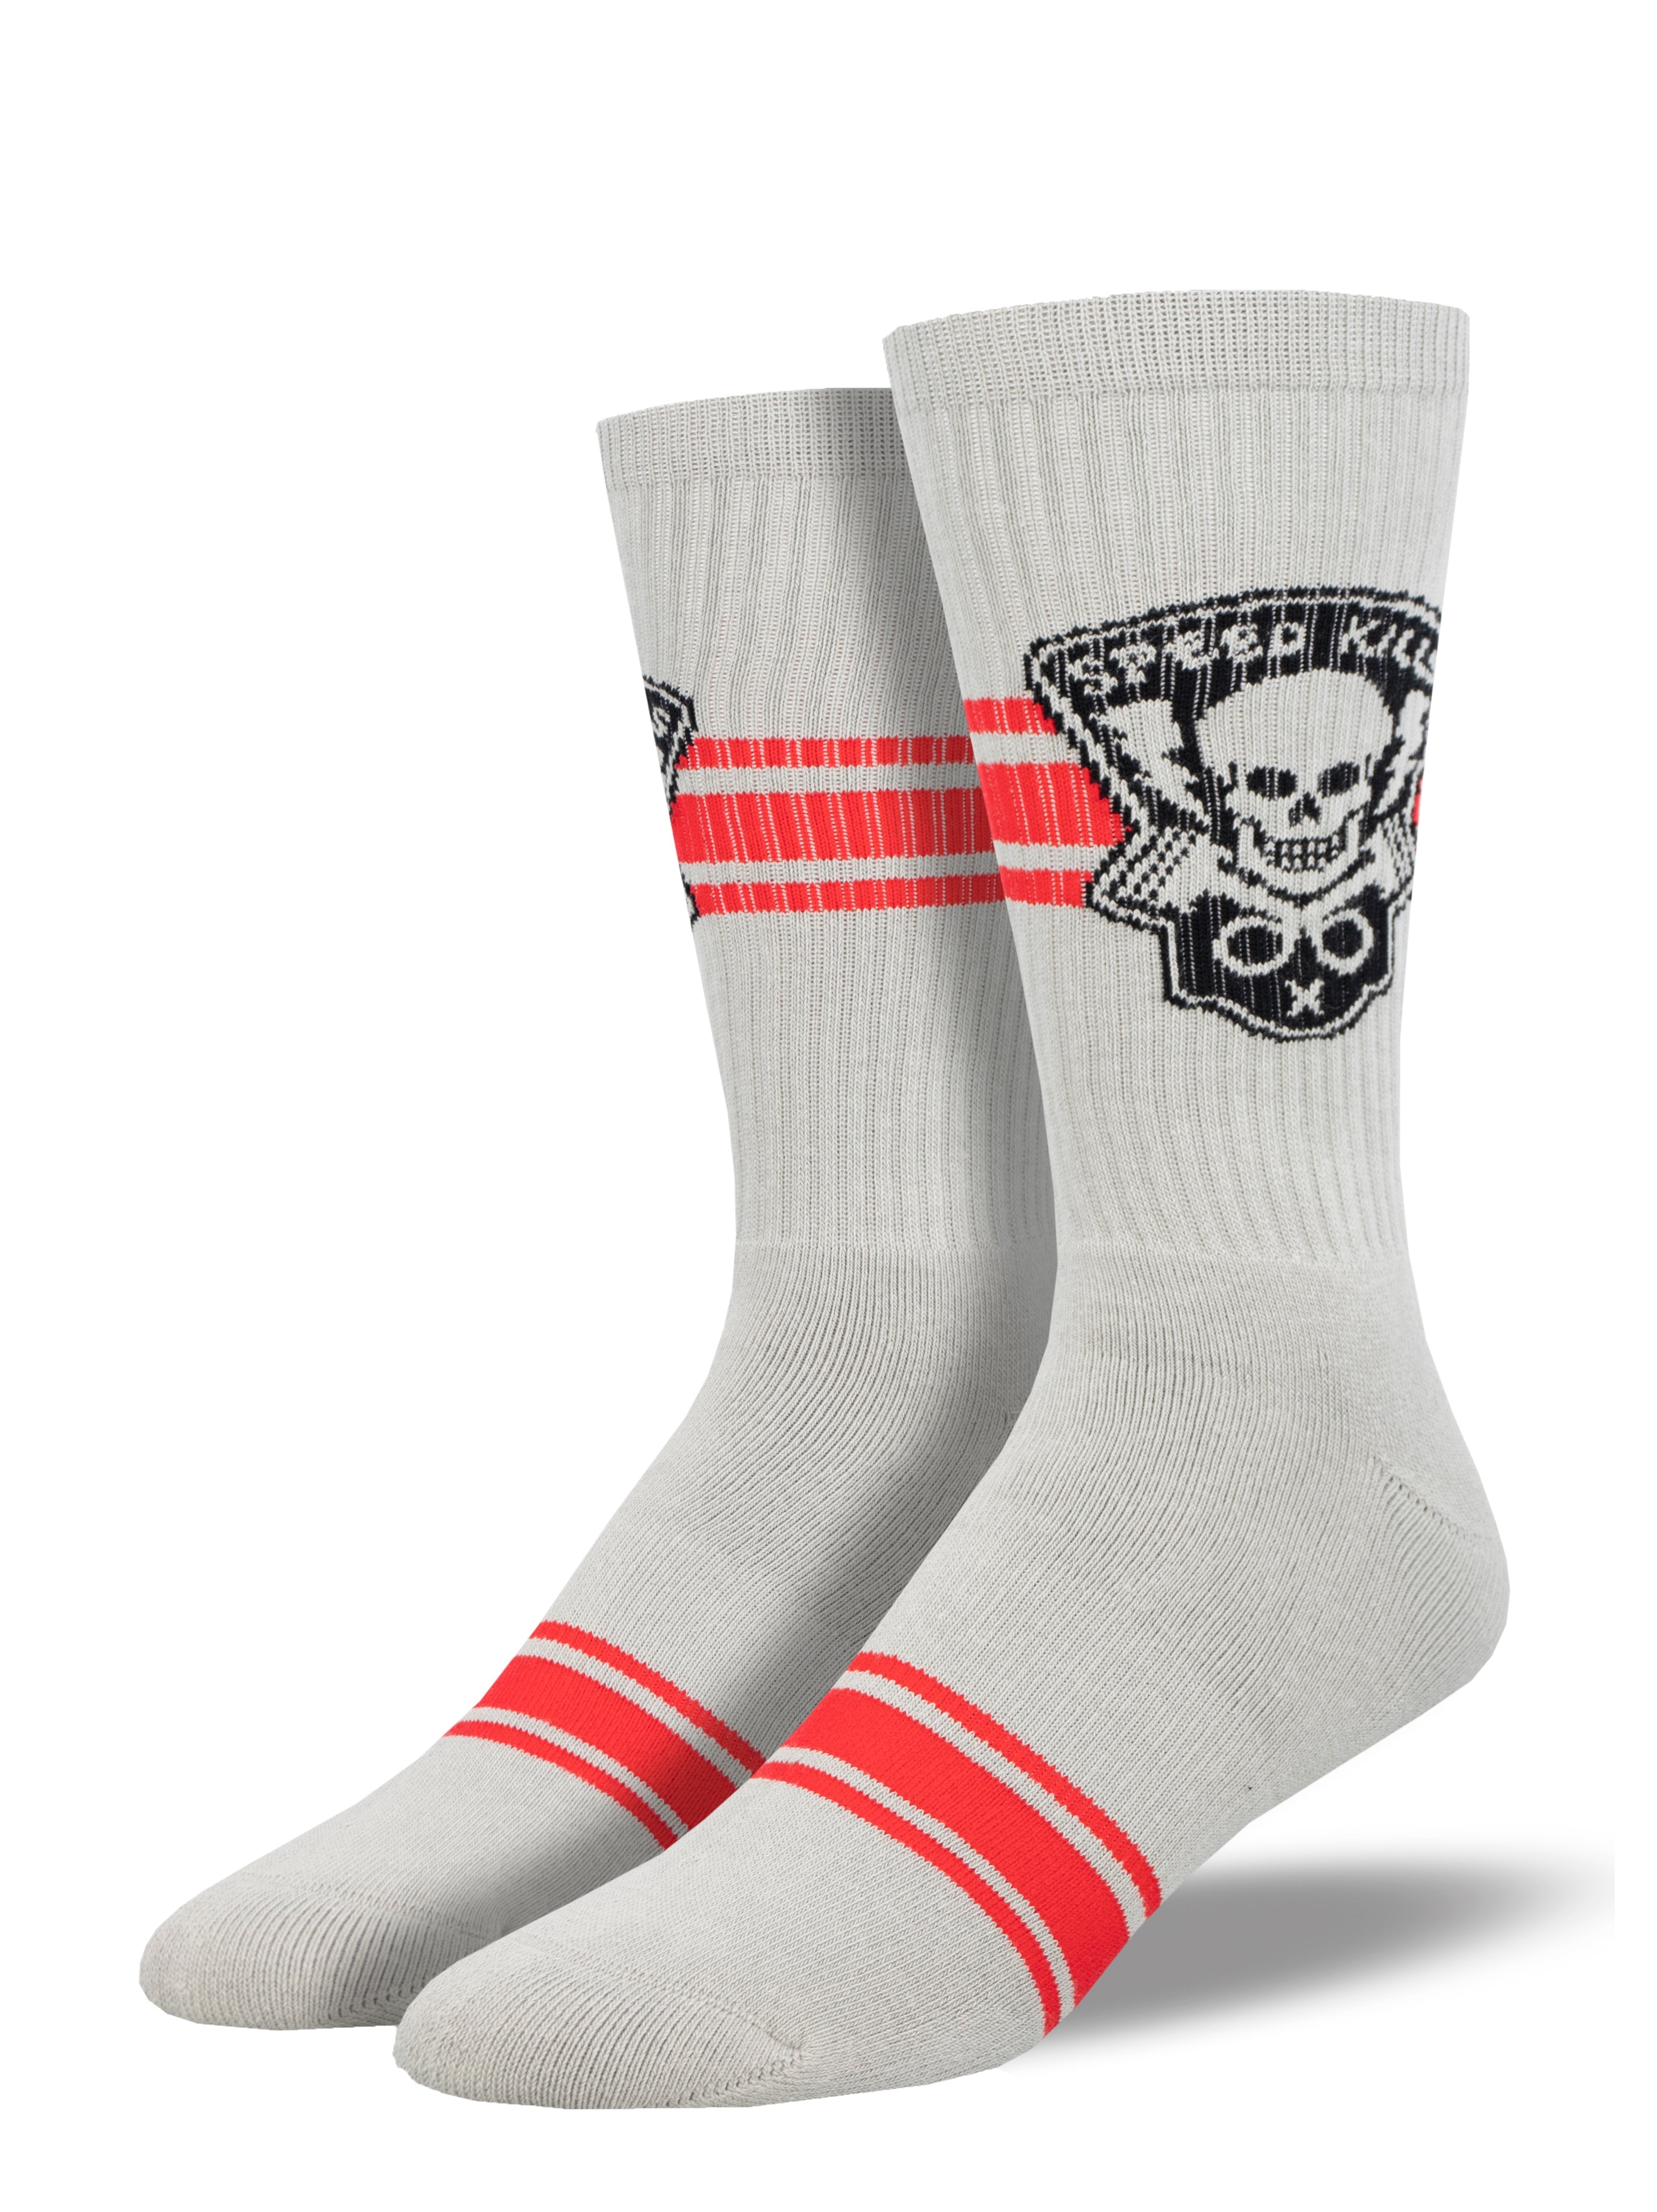 NO BS - "Speed Kills" Athletic Socks